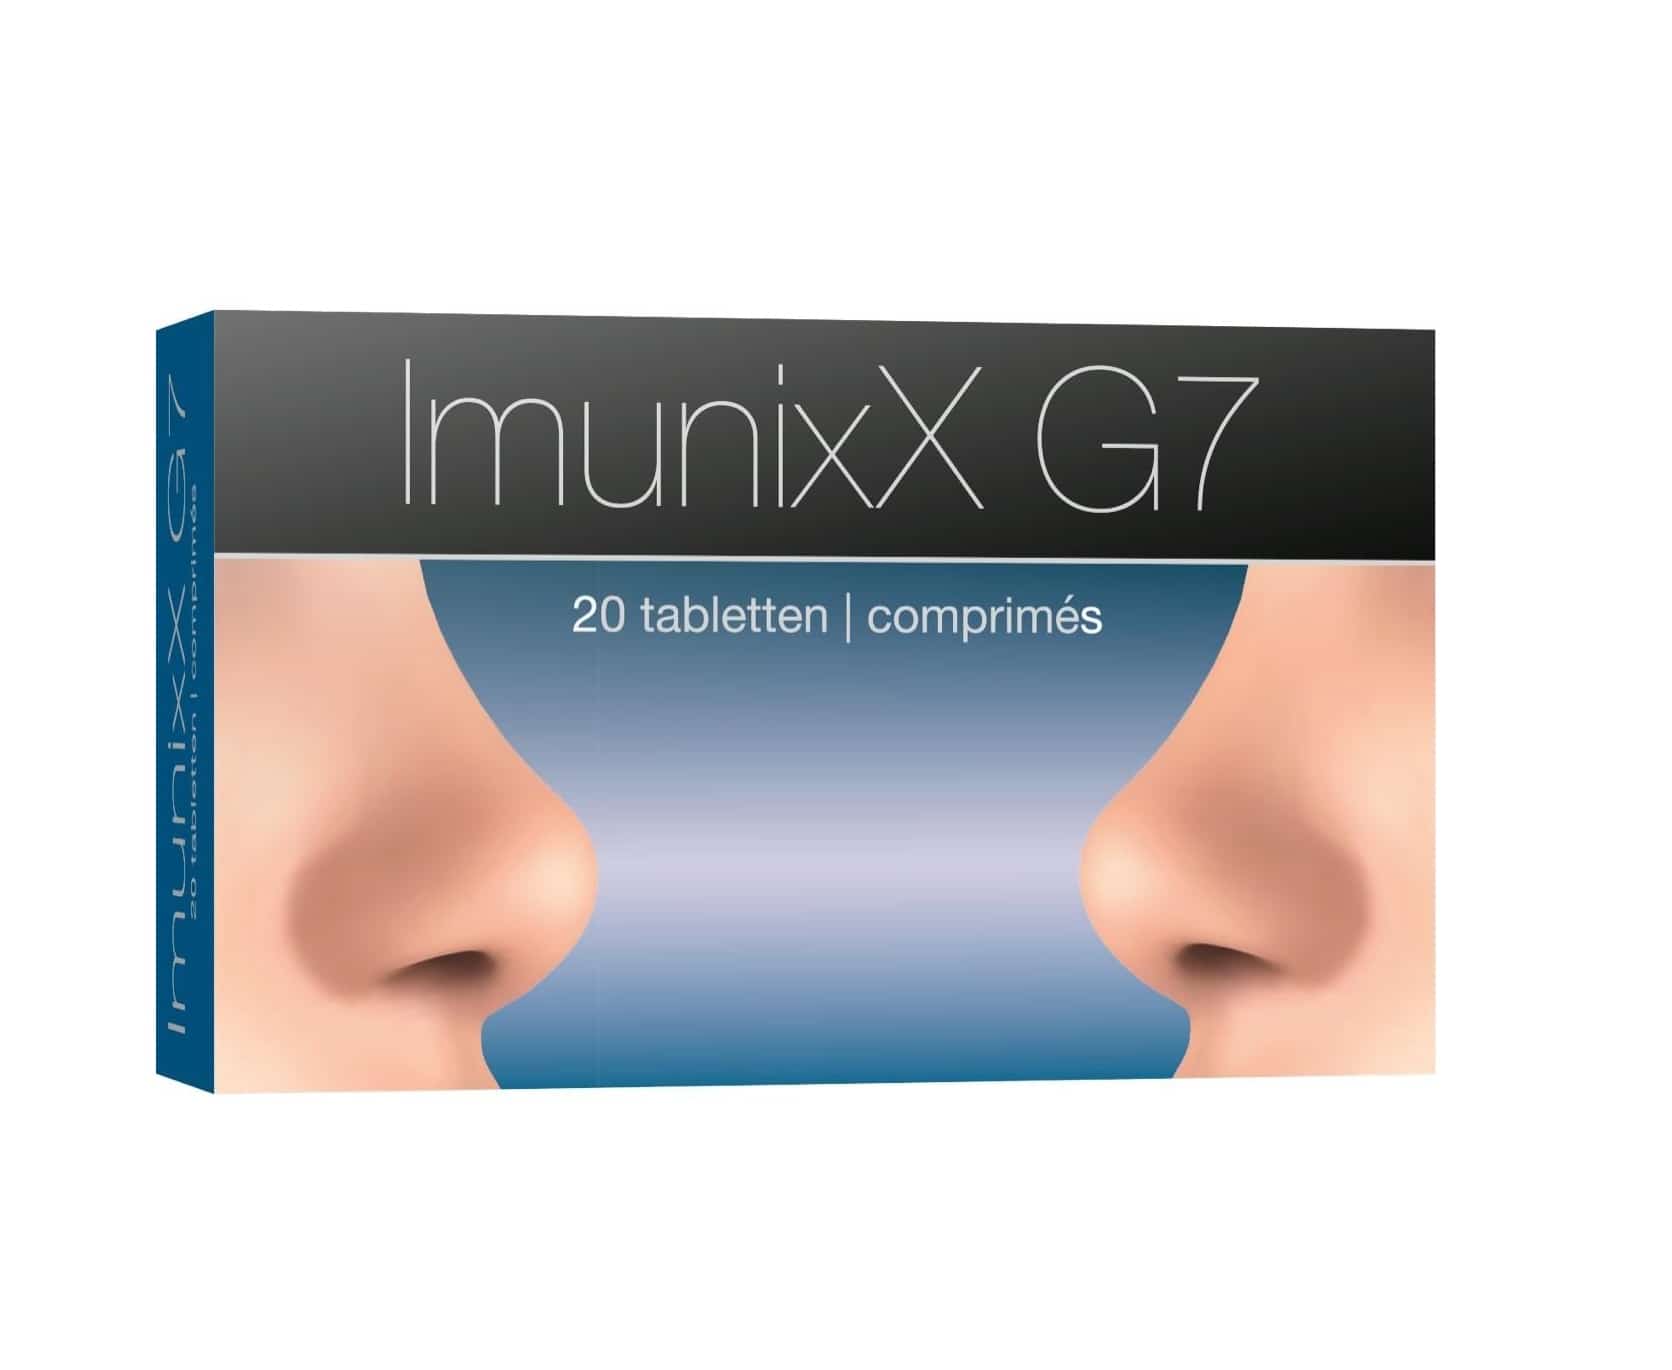 ImunixX G7